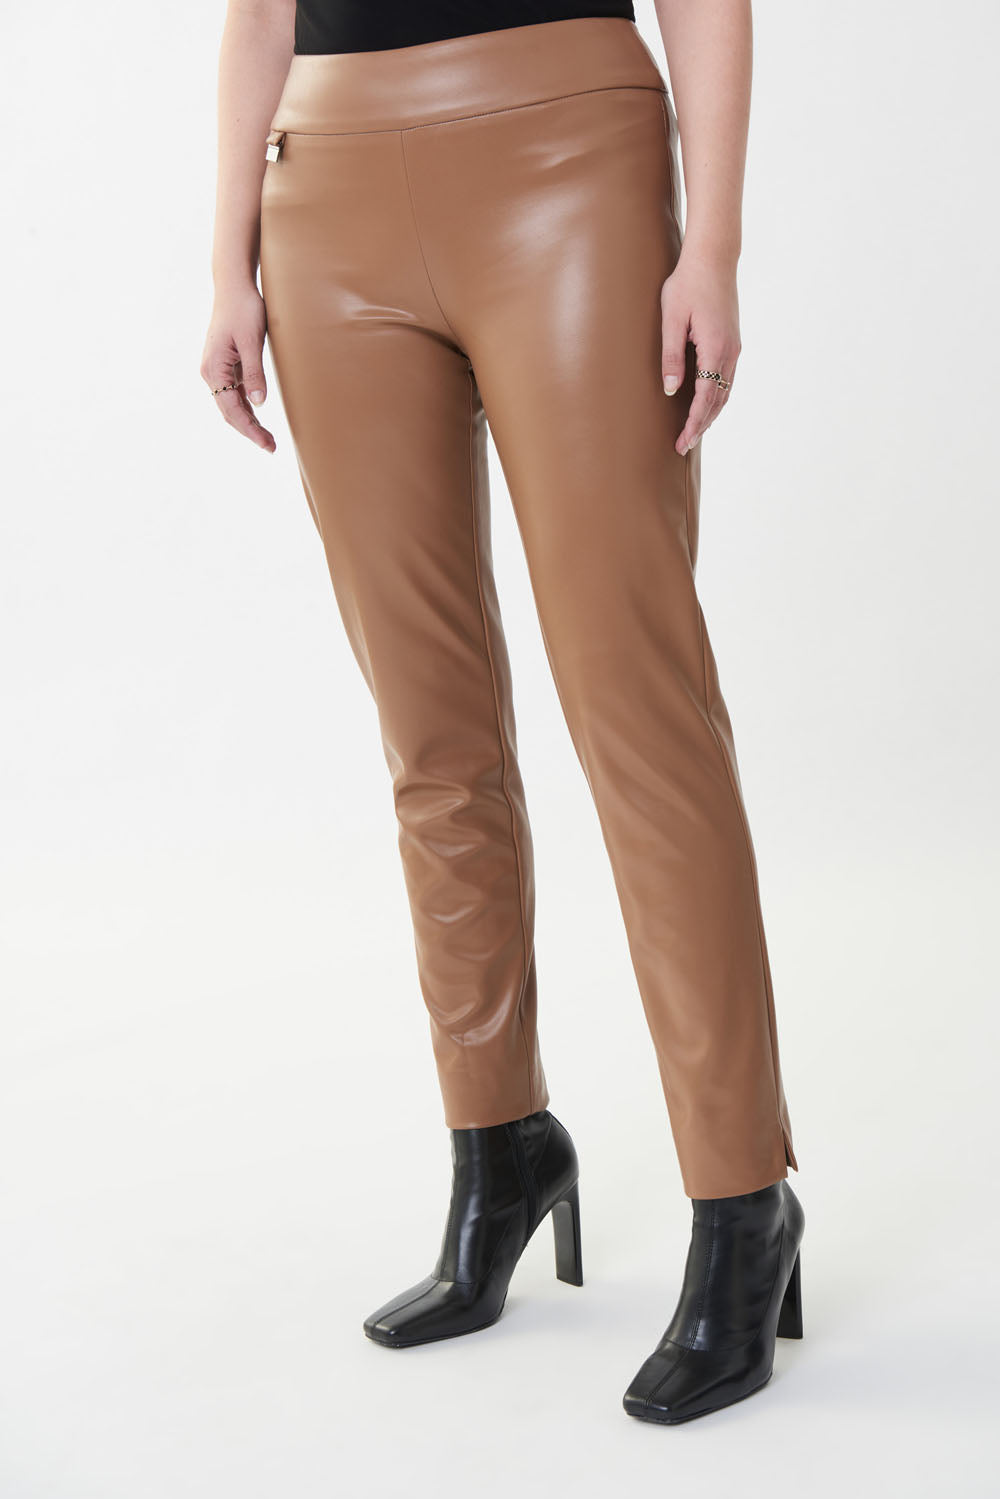 Joseph Ribkoff Faux Leather Pants Style 223131